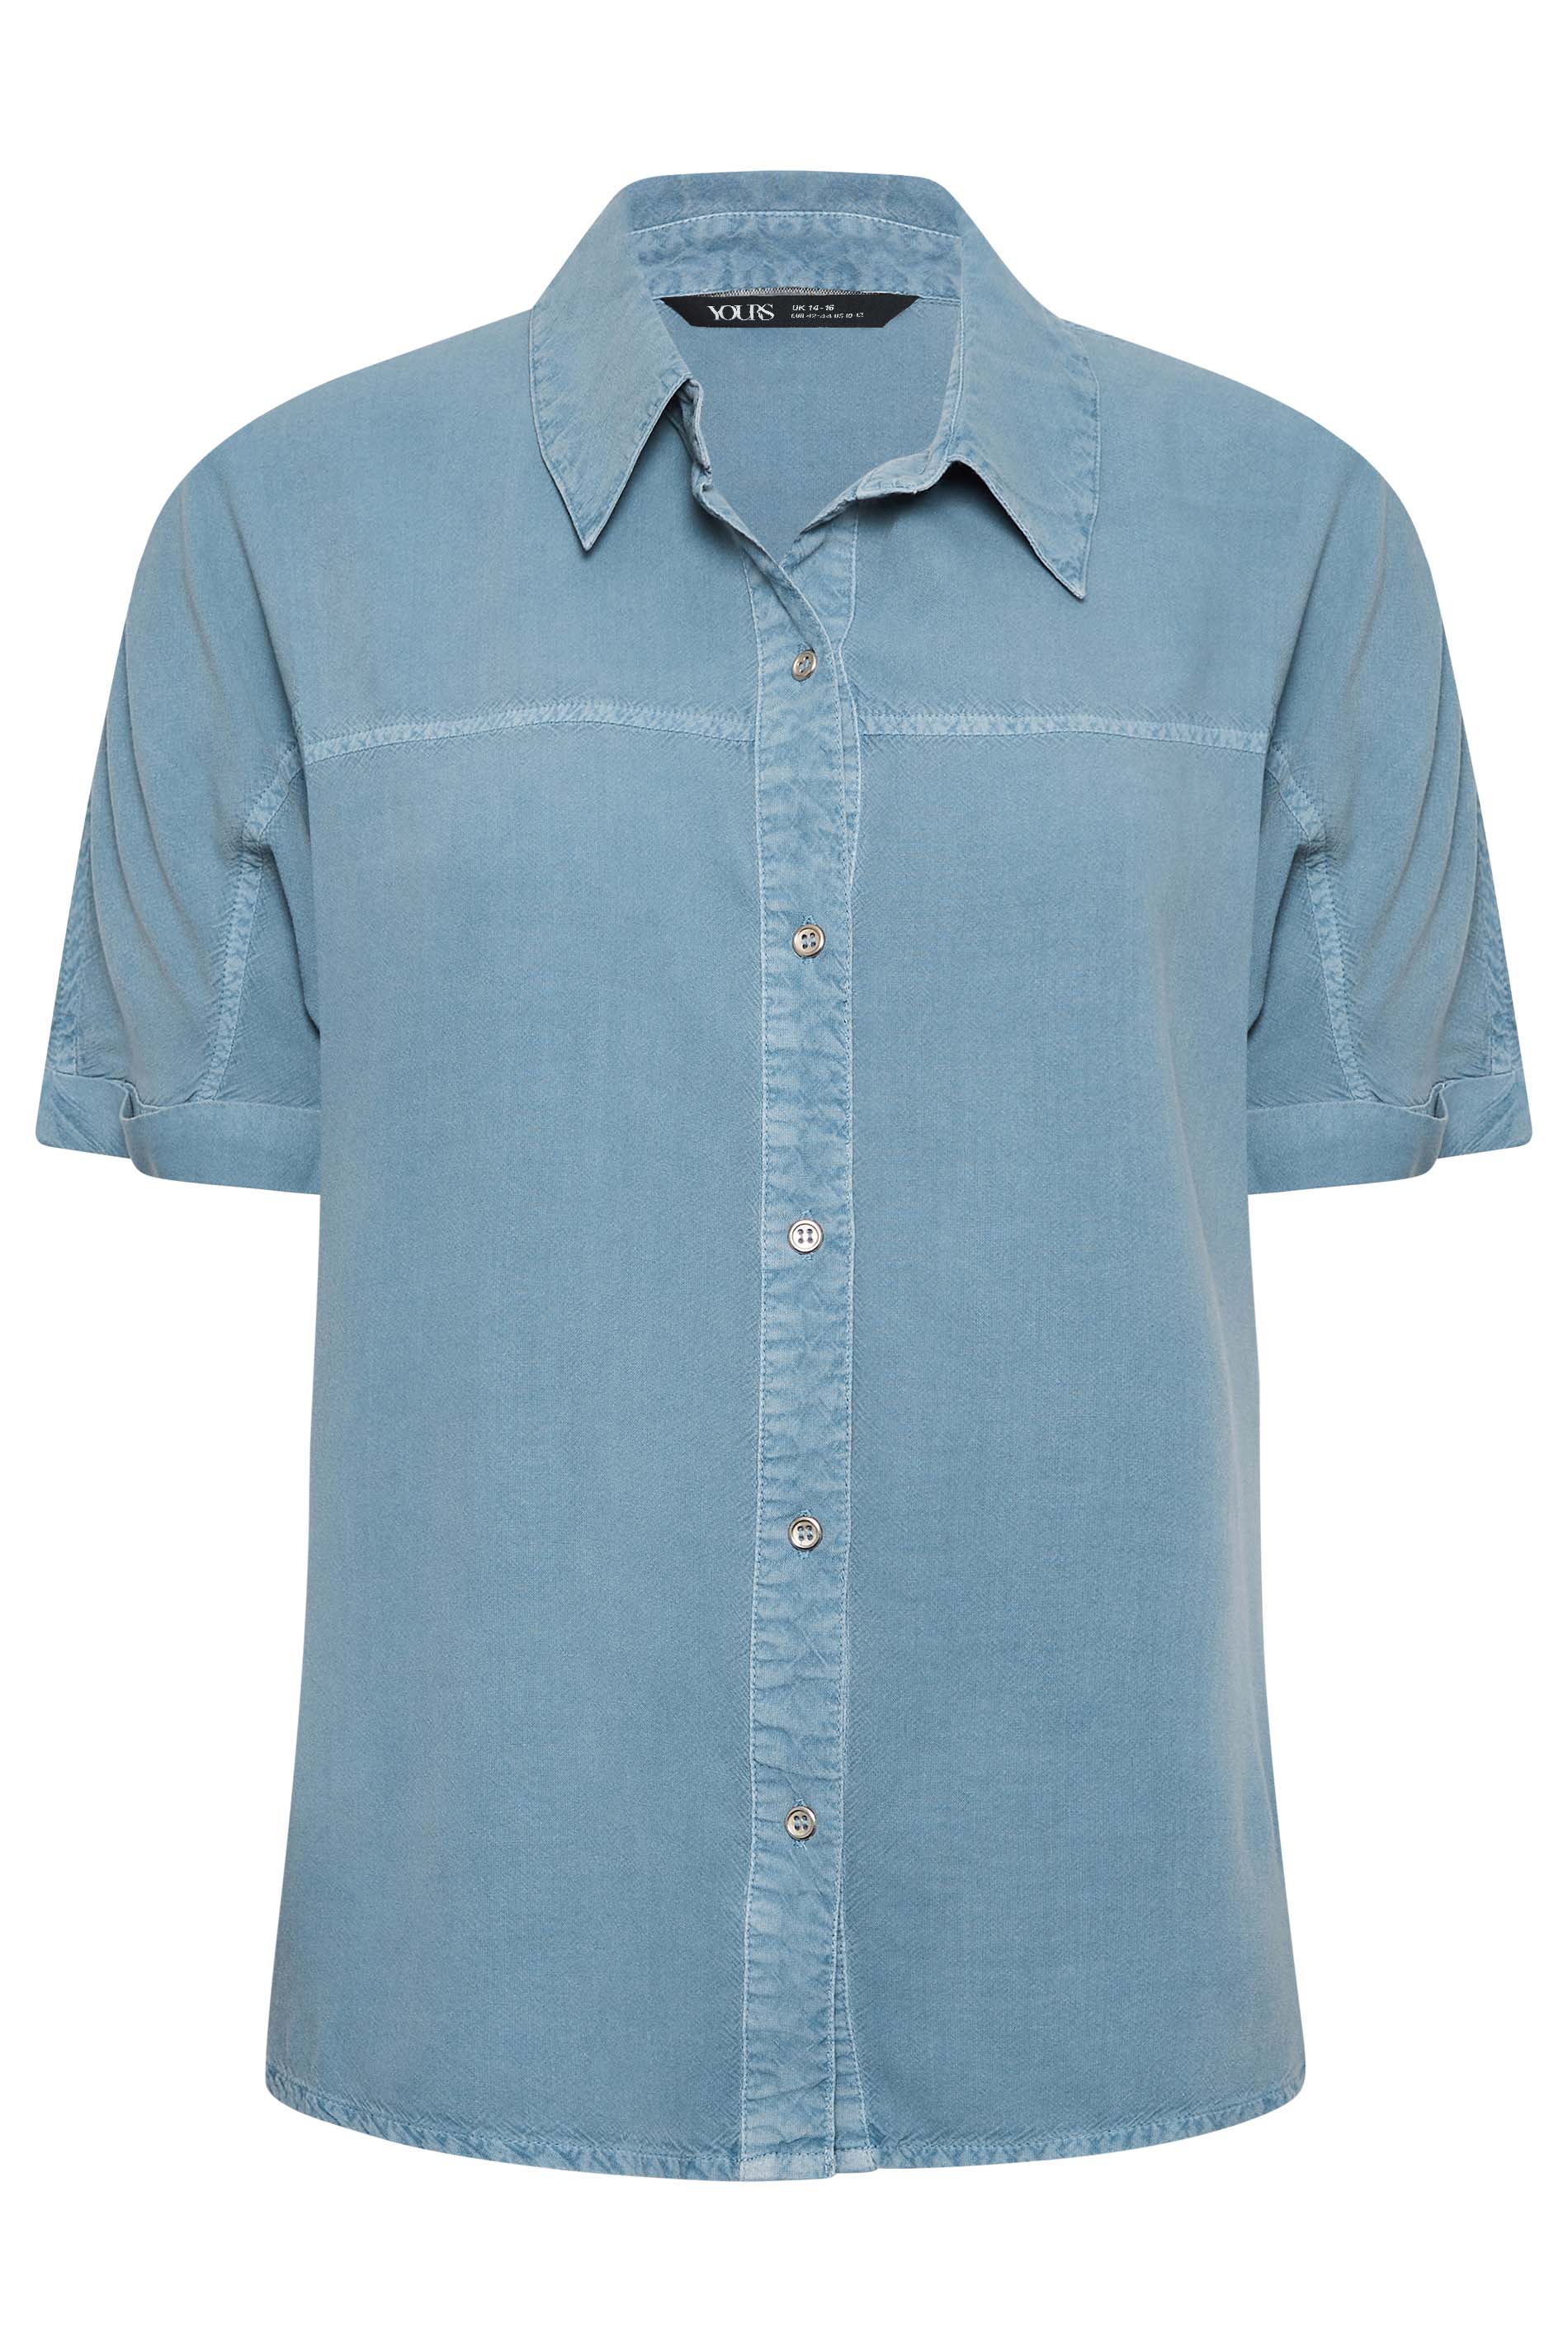 YOURS PETITE Plus Size Blue Short Sleeve Shirt | Yours Clothing 1